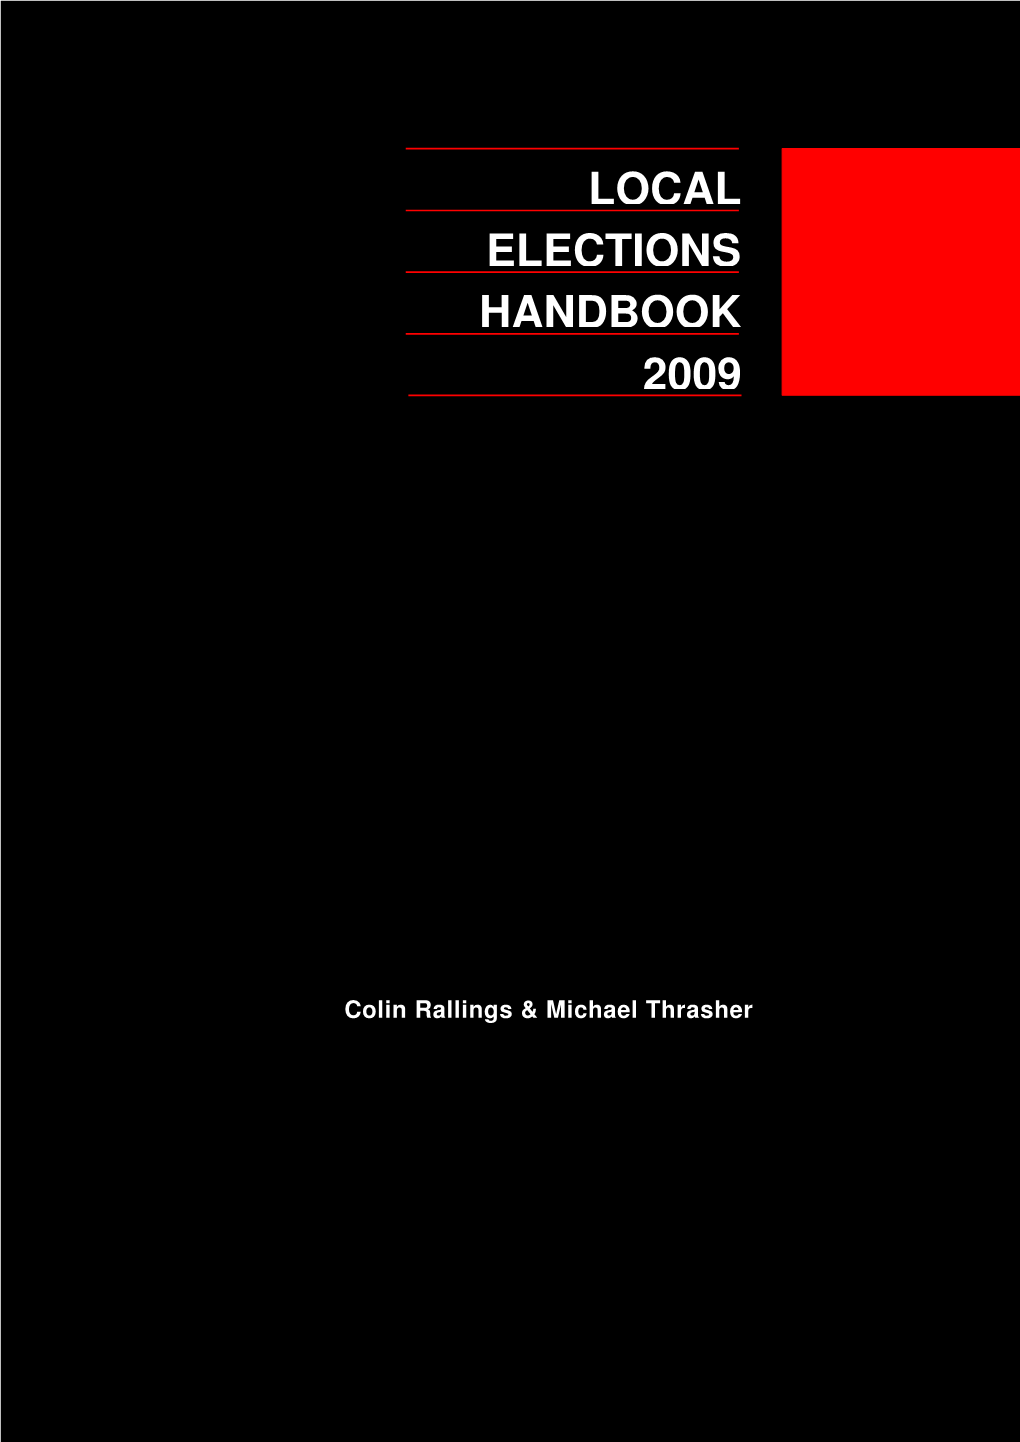 Local Elections Handbook 2009 Complete